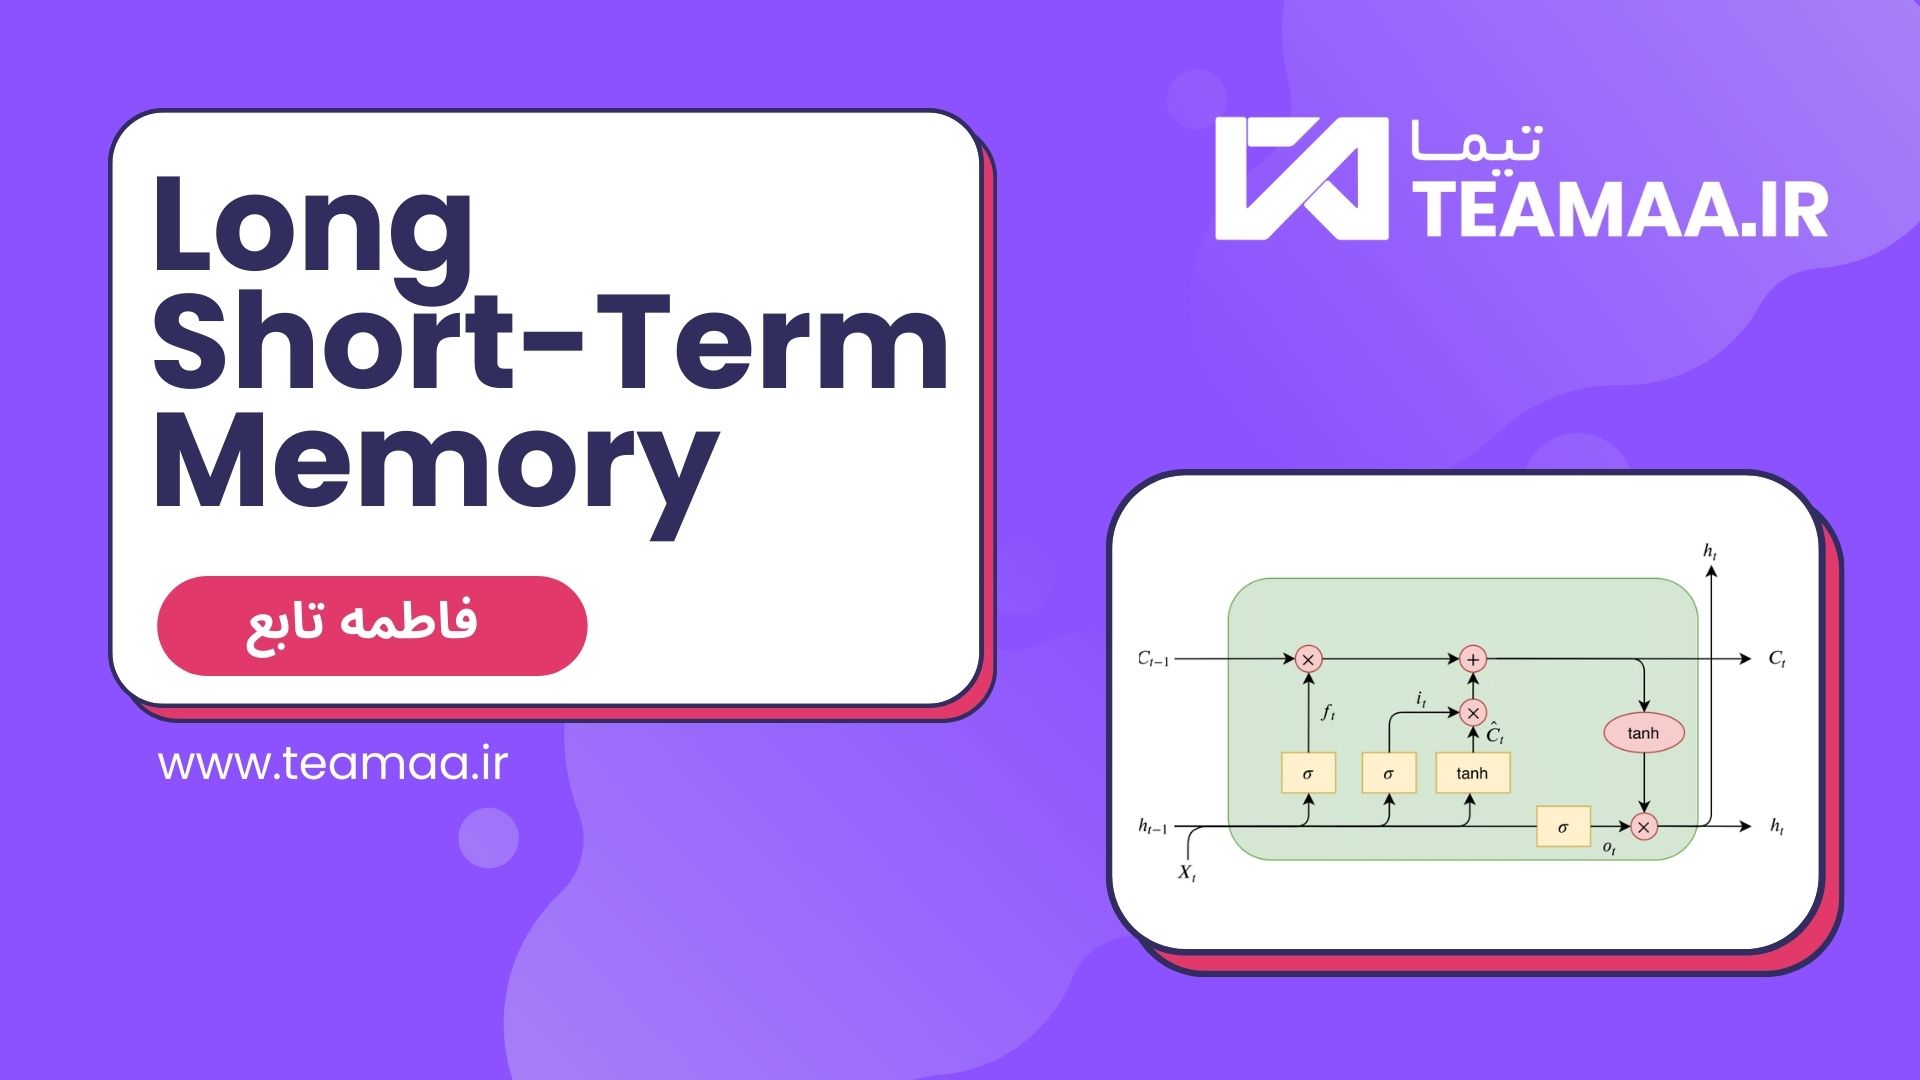 https://teamaa.ir/Assets/Images/Blog/TEAMAA-(nkDMzQ5D)_Long Short Term Memory.jpg